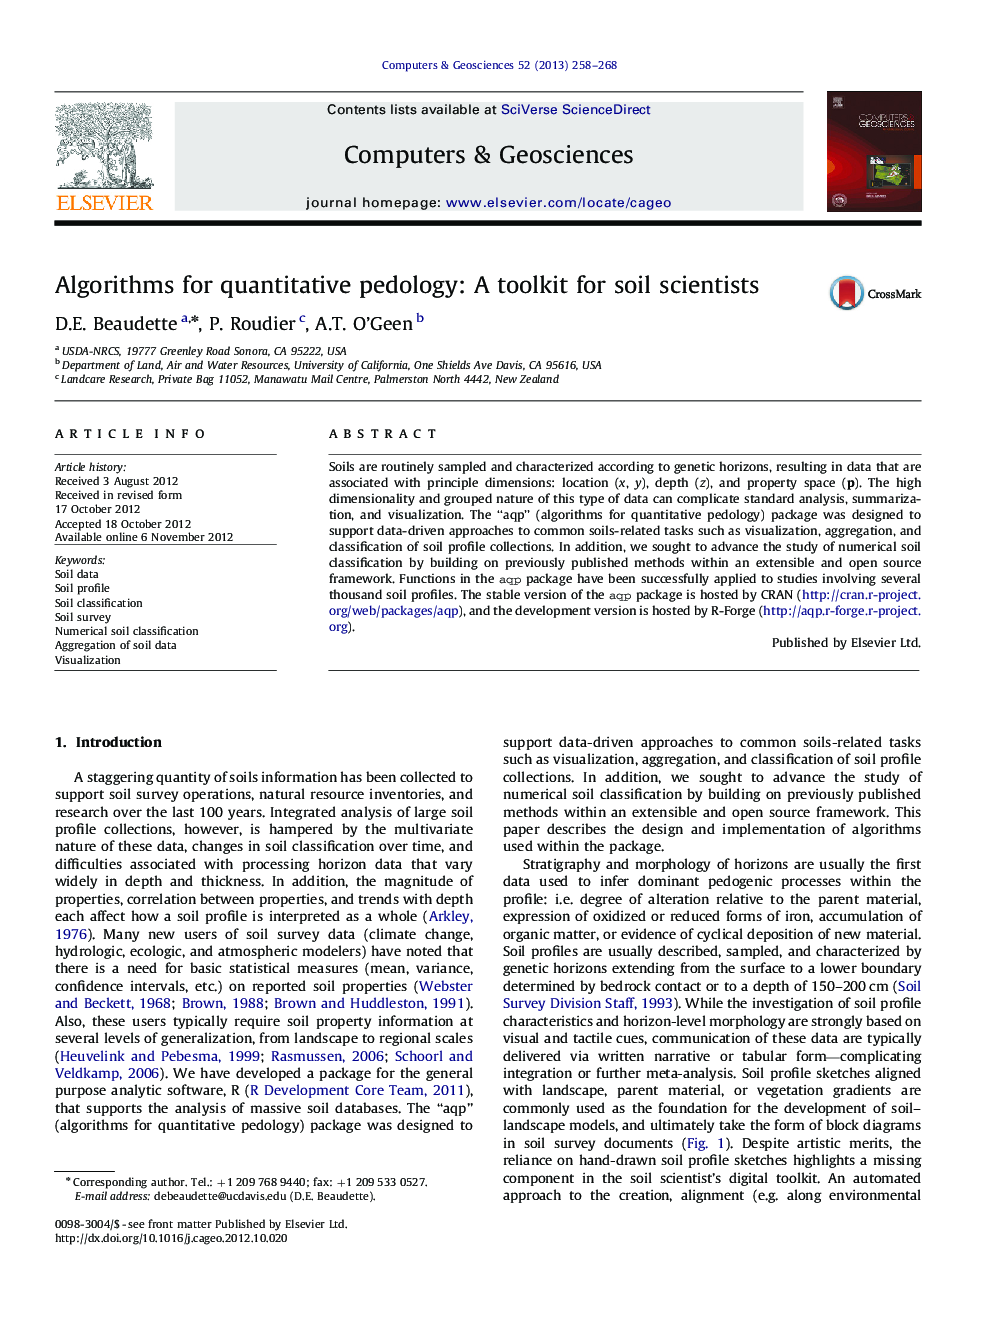 Algorithms for quantitative pedology: A toolkit for soil scientists